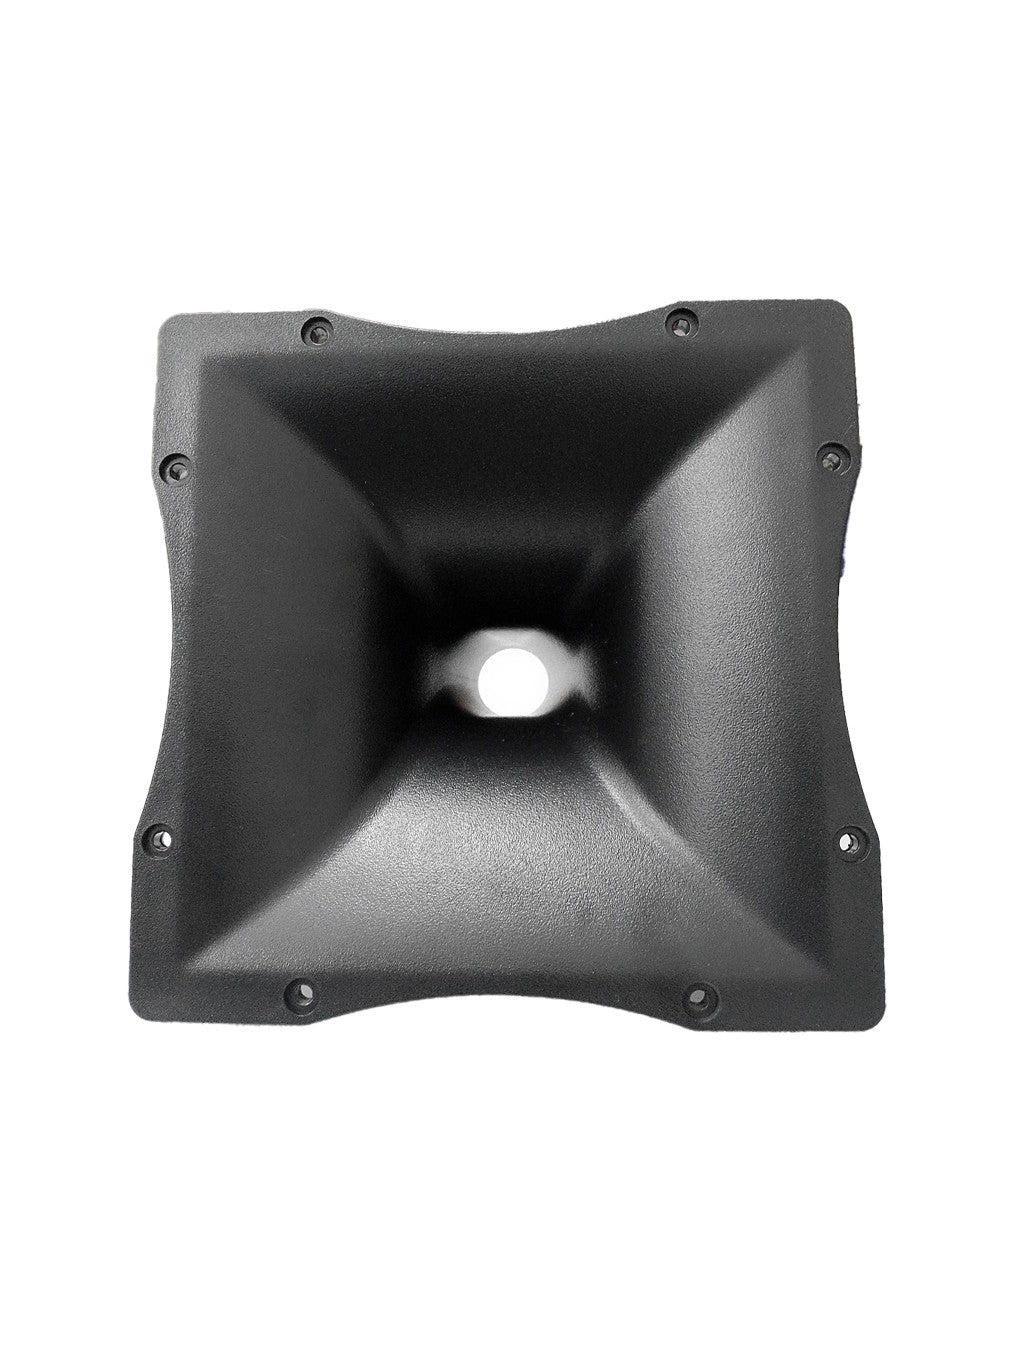 KEVLER H-315 10" ABS Horn with 1.5" Exit Throat for Square Horn Speaker System